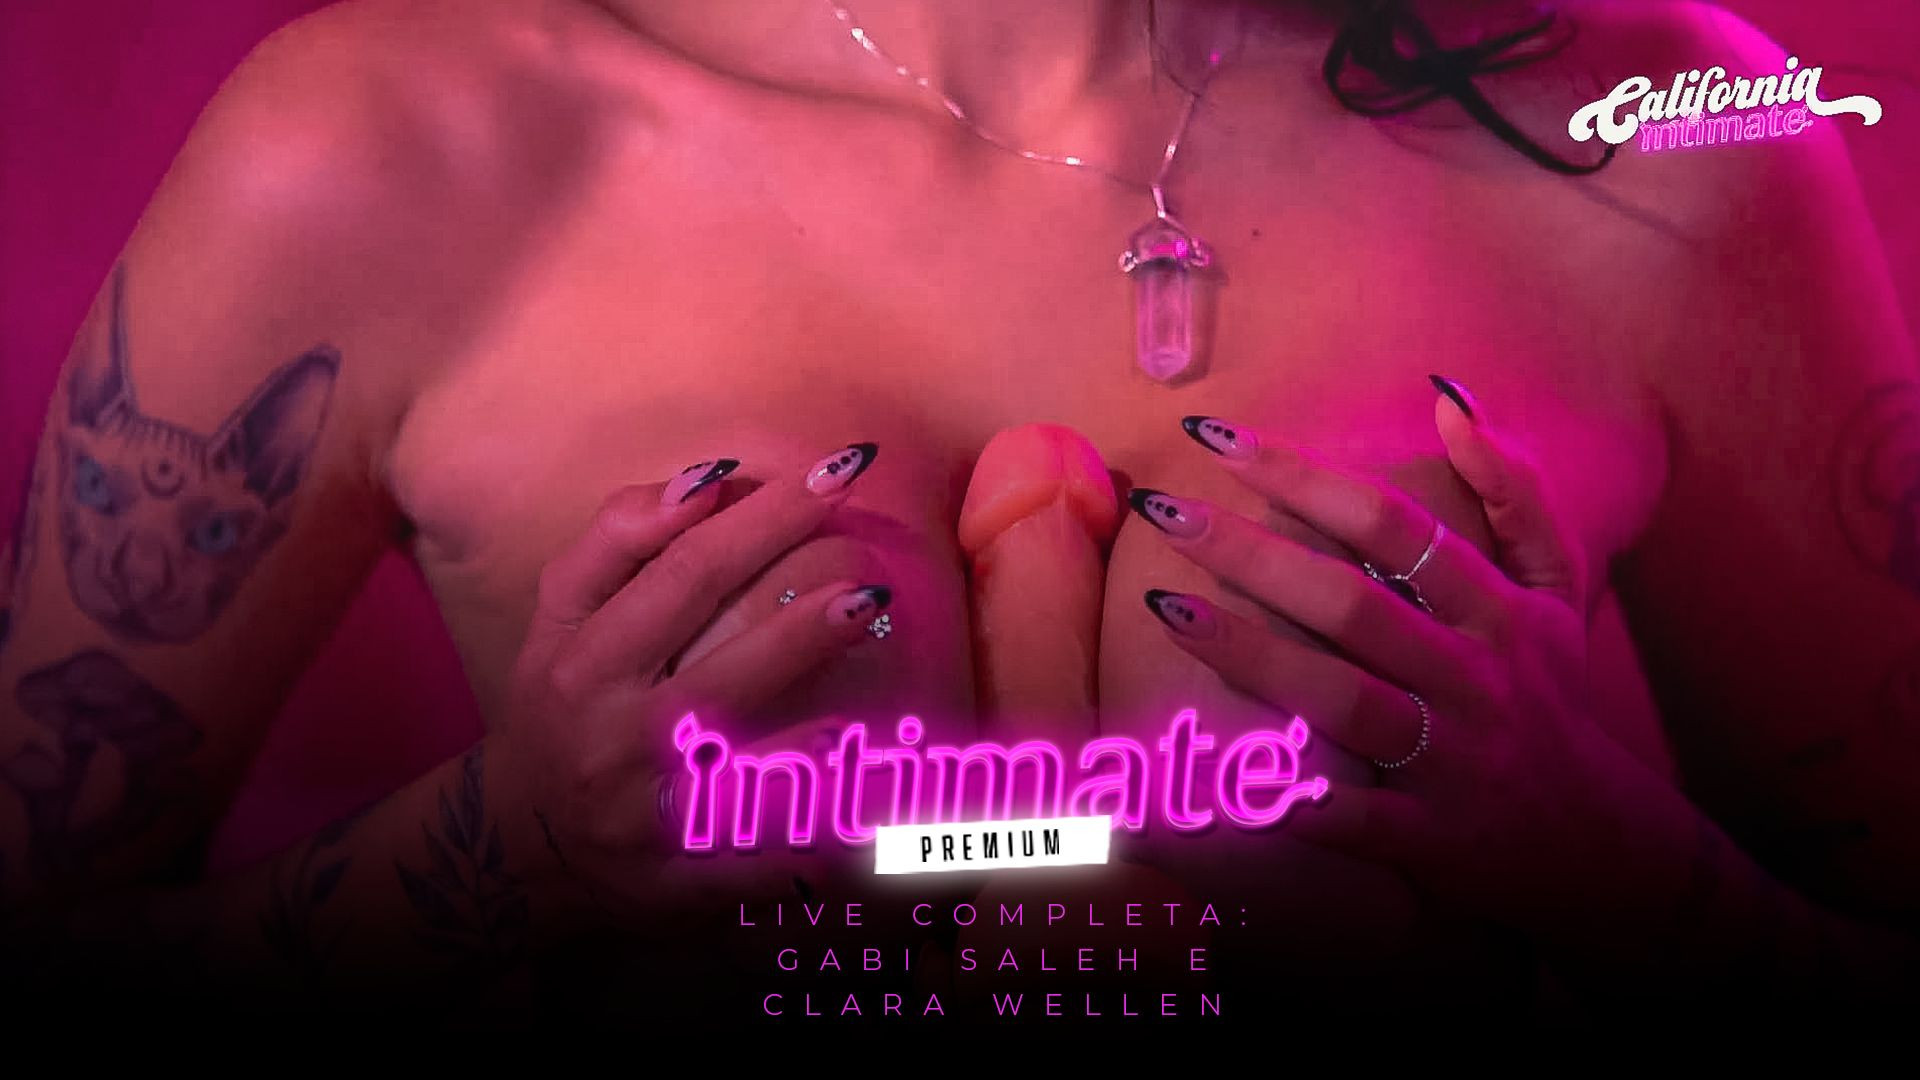 ⁣Intimate Premium - Live completa: Gabi Saleh e Clara Wellen